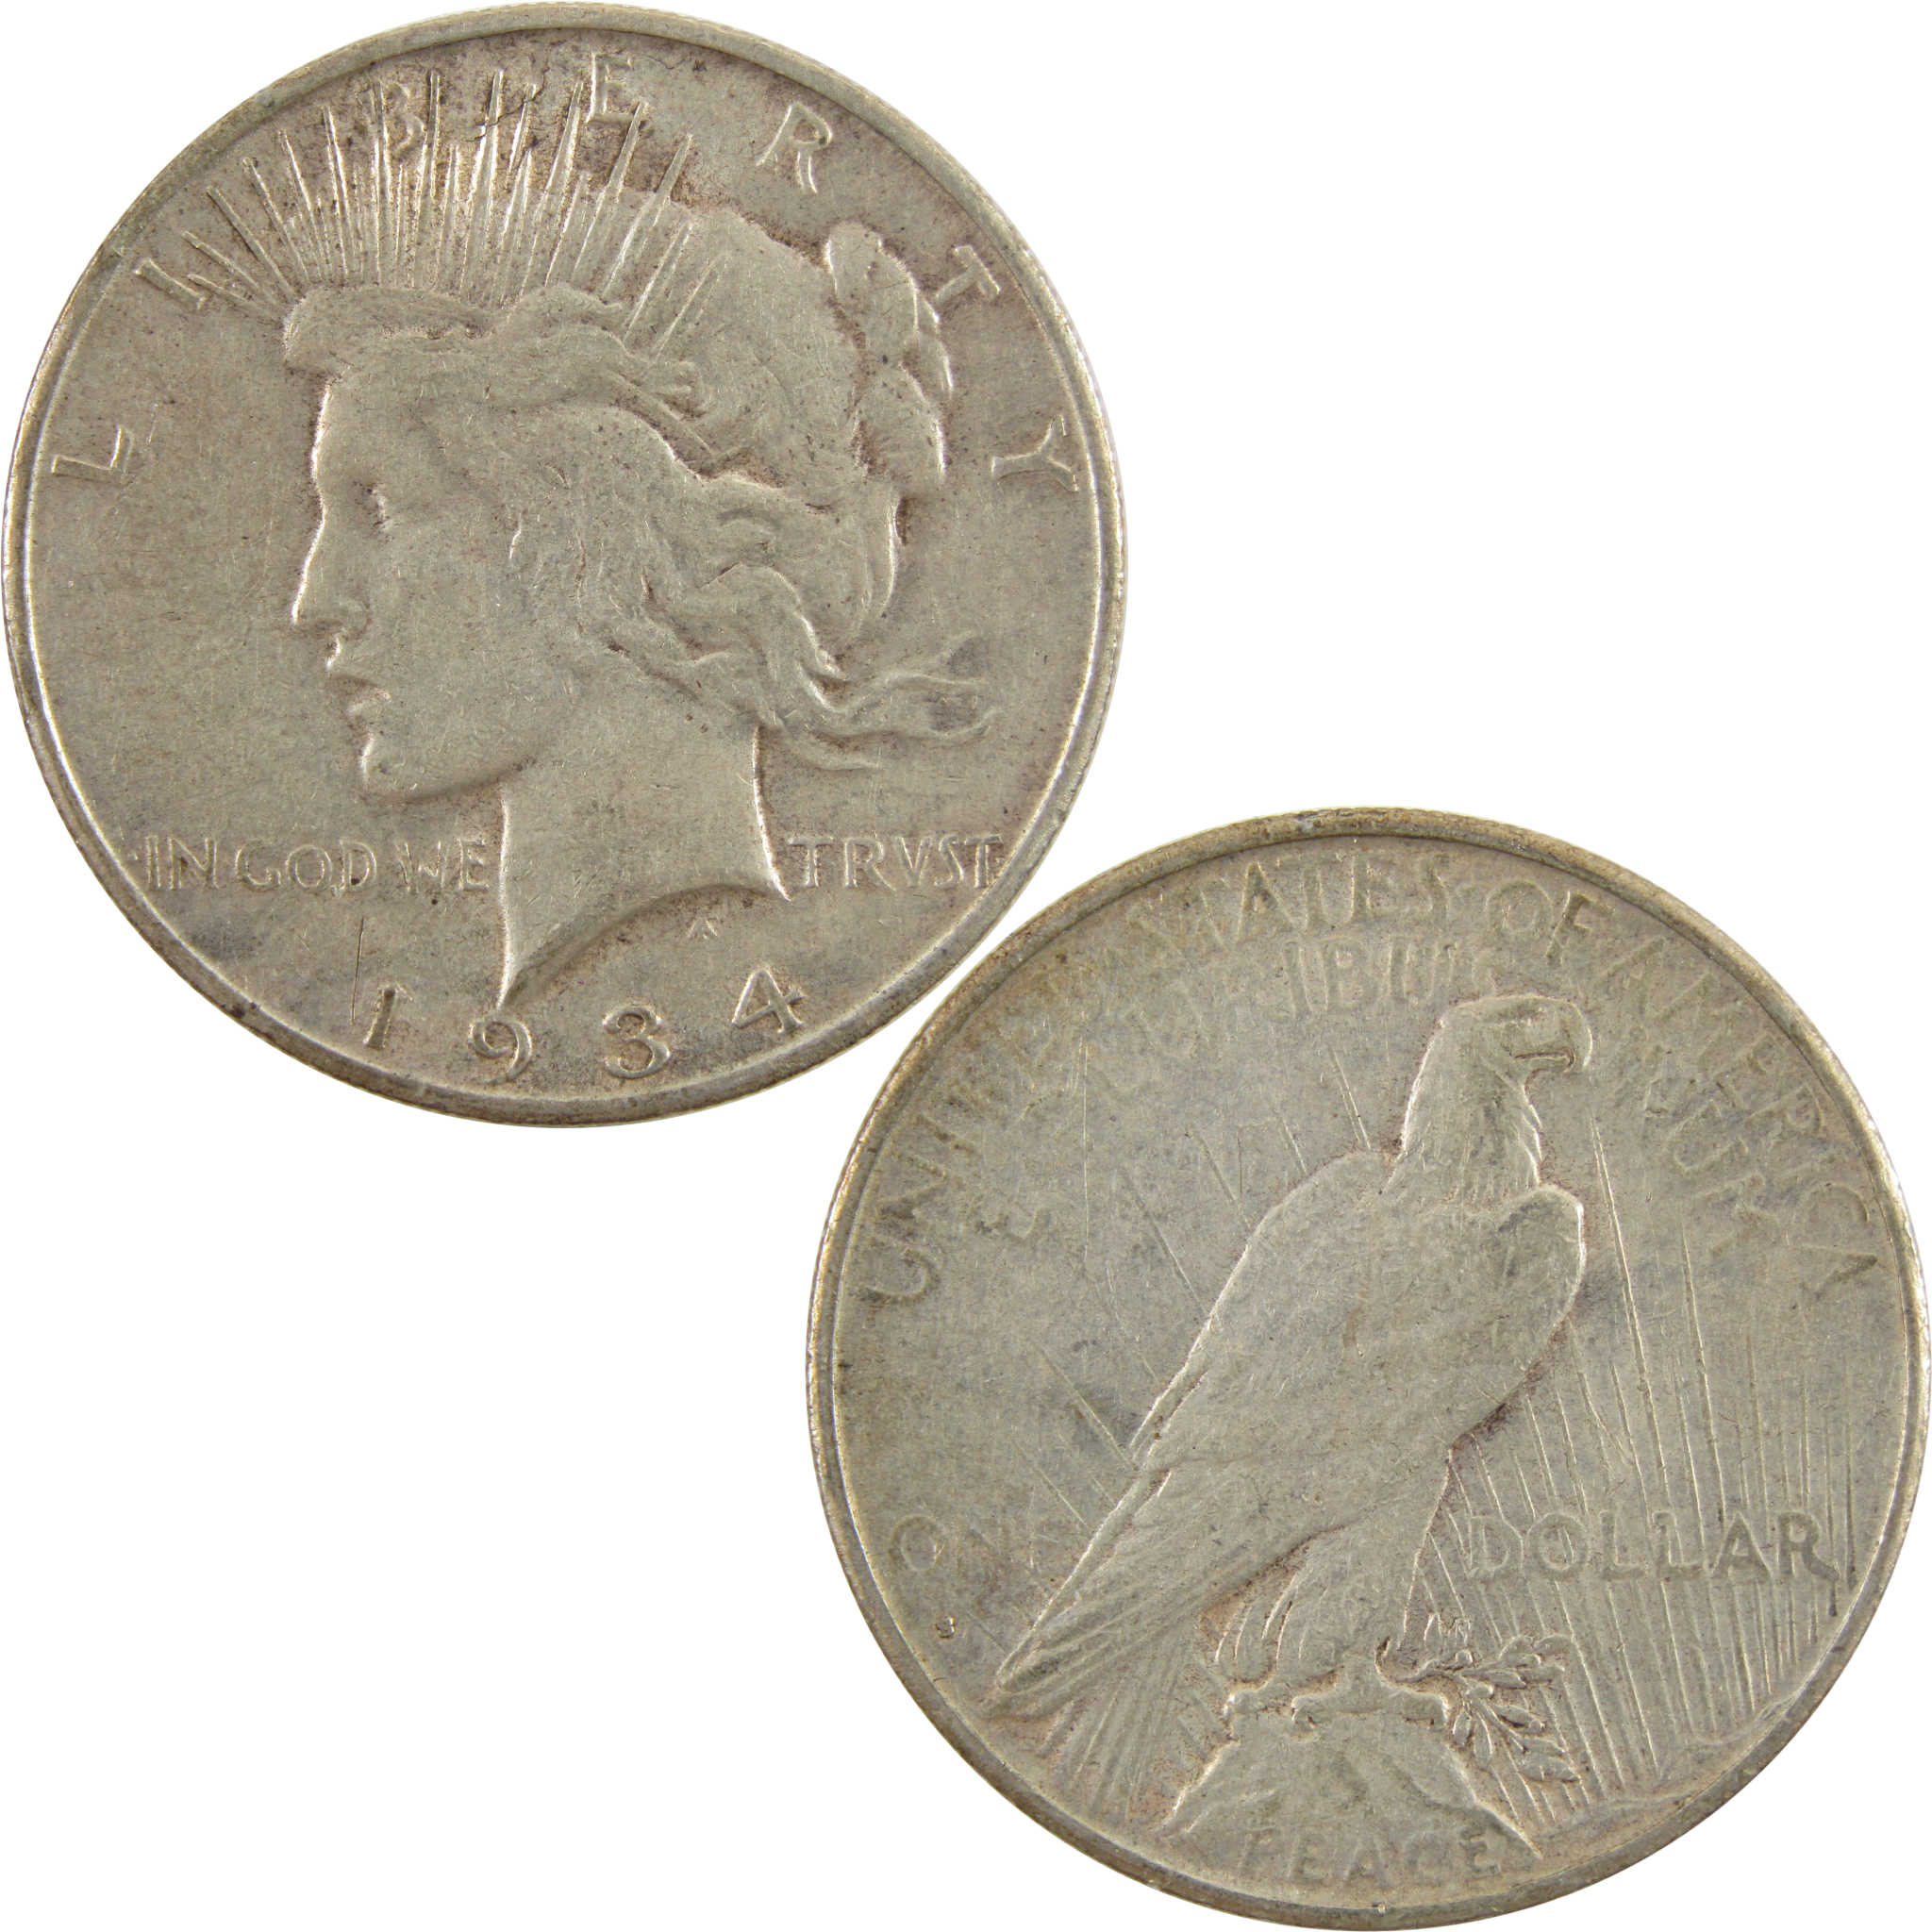 1934 S Peace Dollar VF Very Fine 90% Silver $1 Coin SKU:I11124